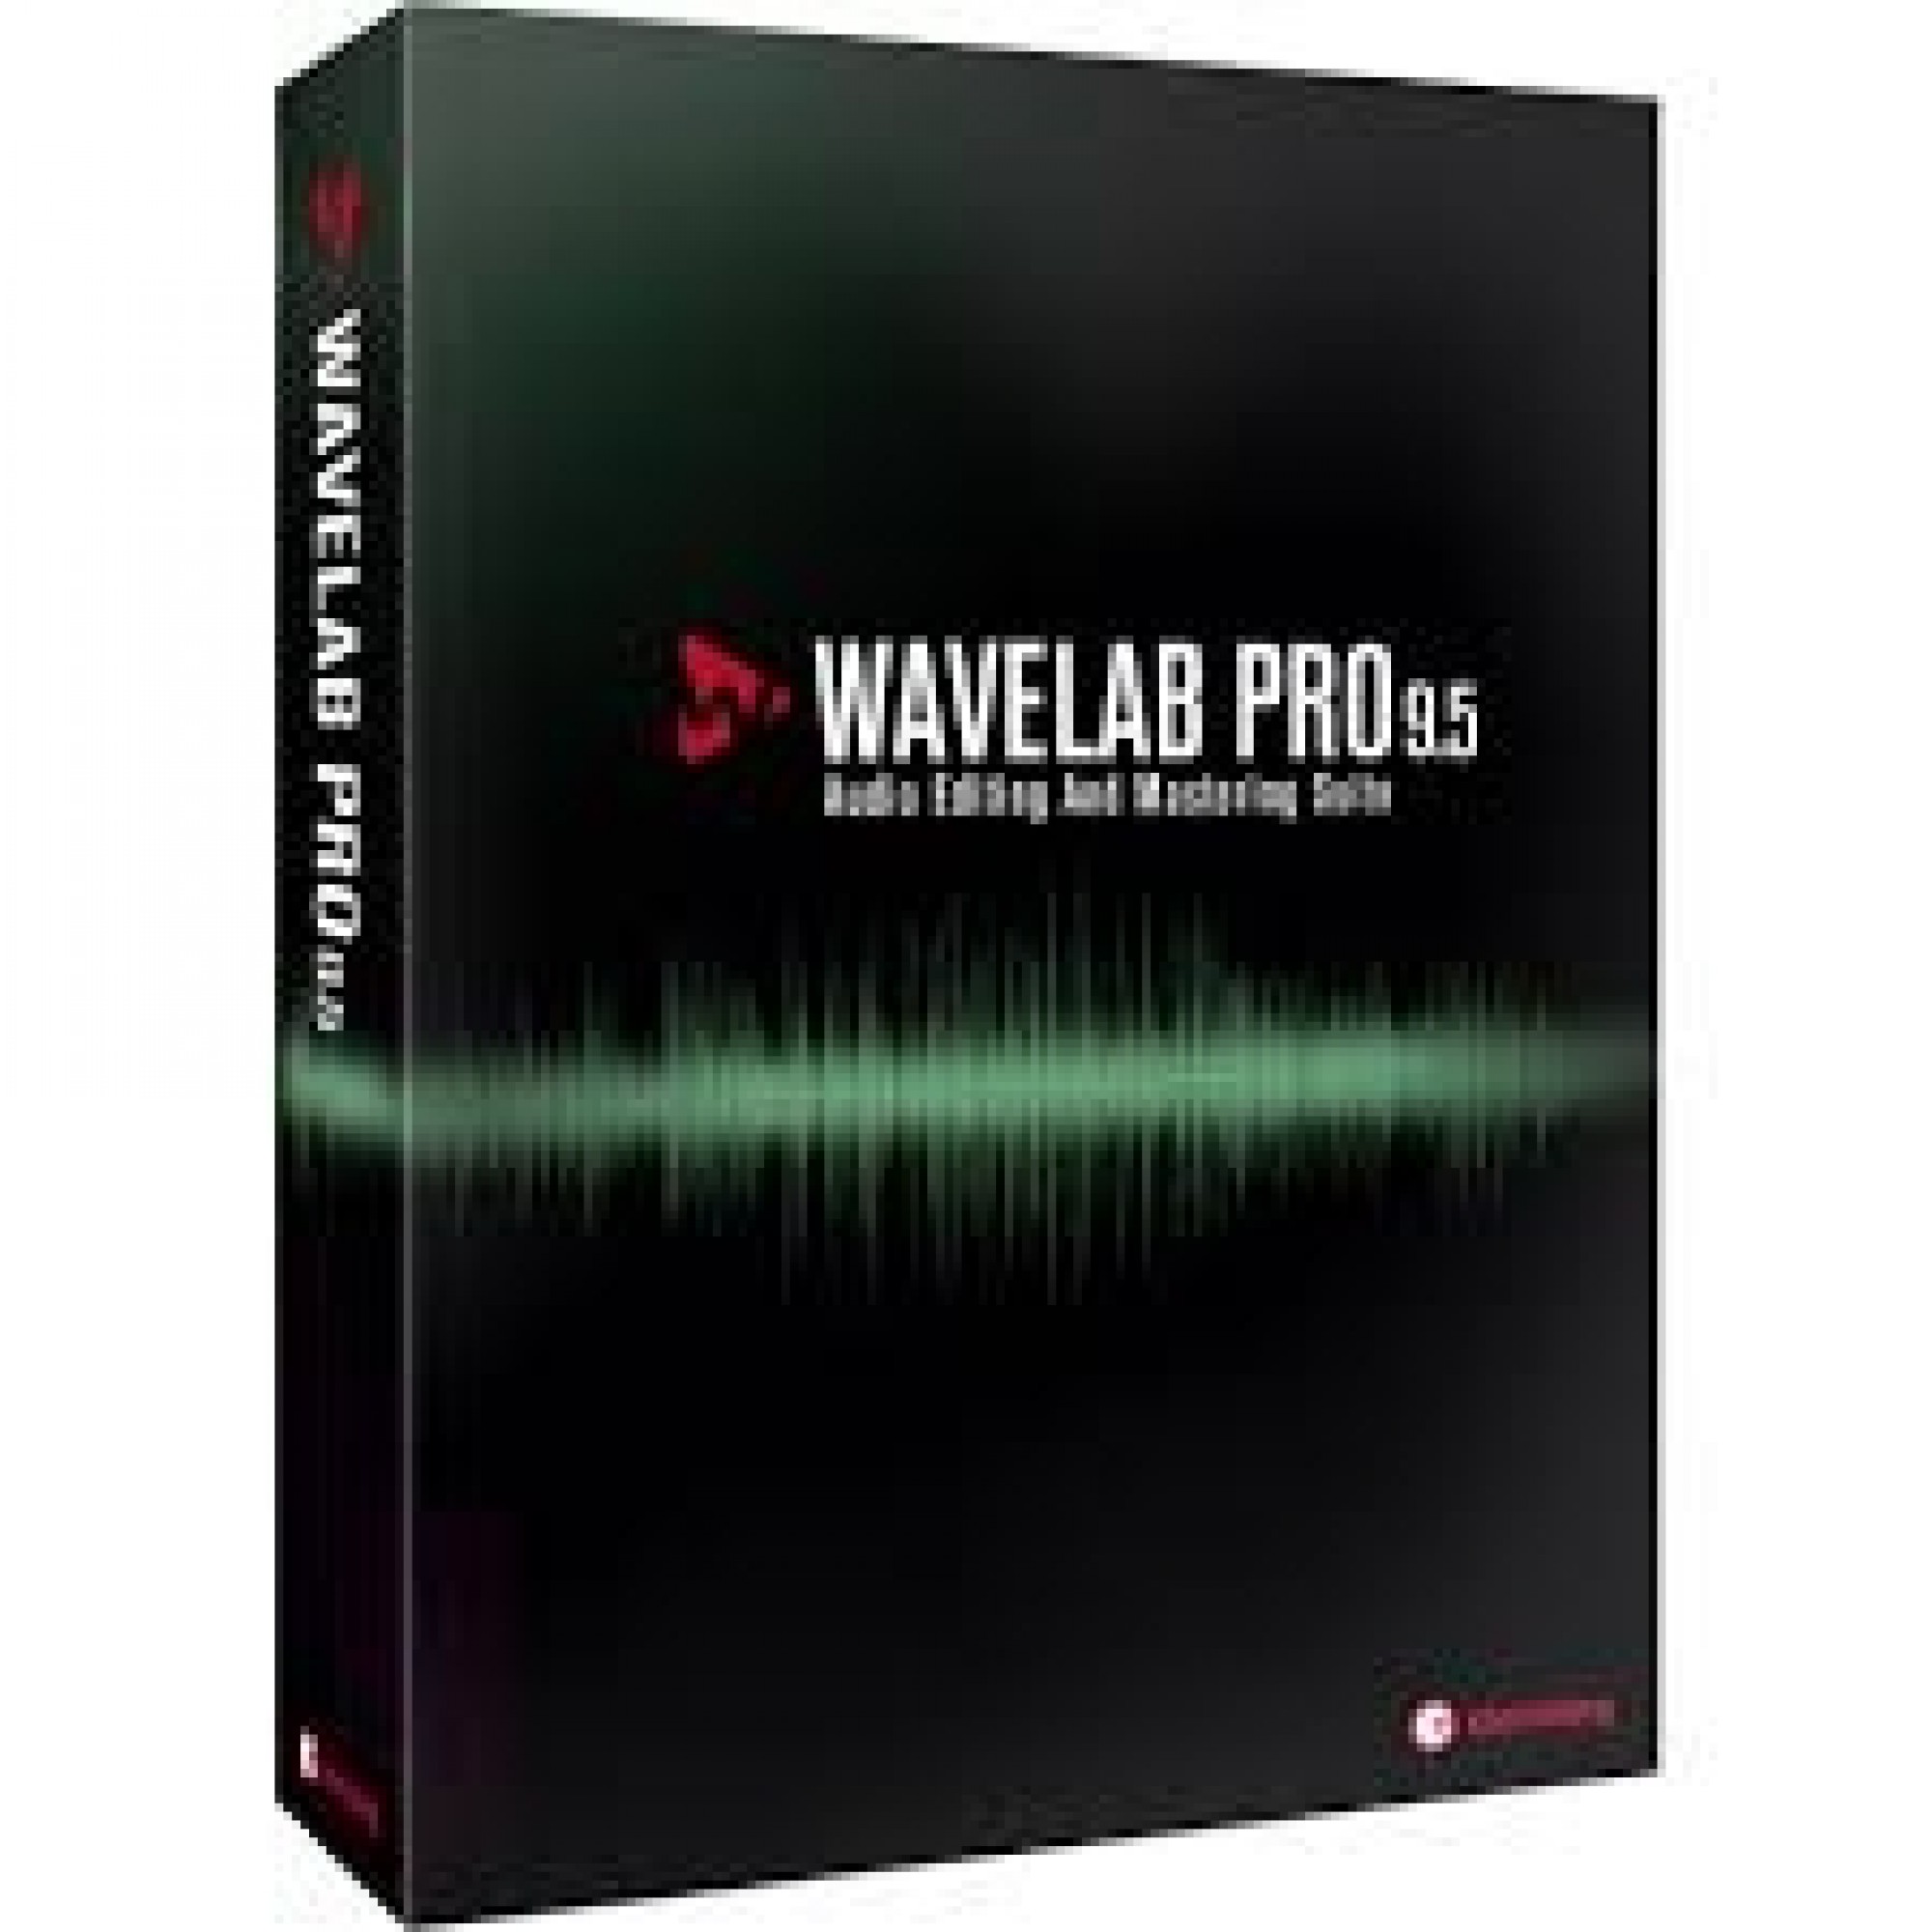 wavelab pro 9.5 mastering